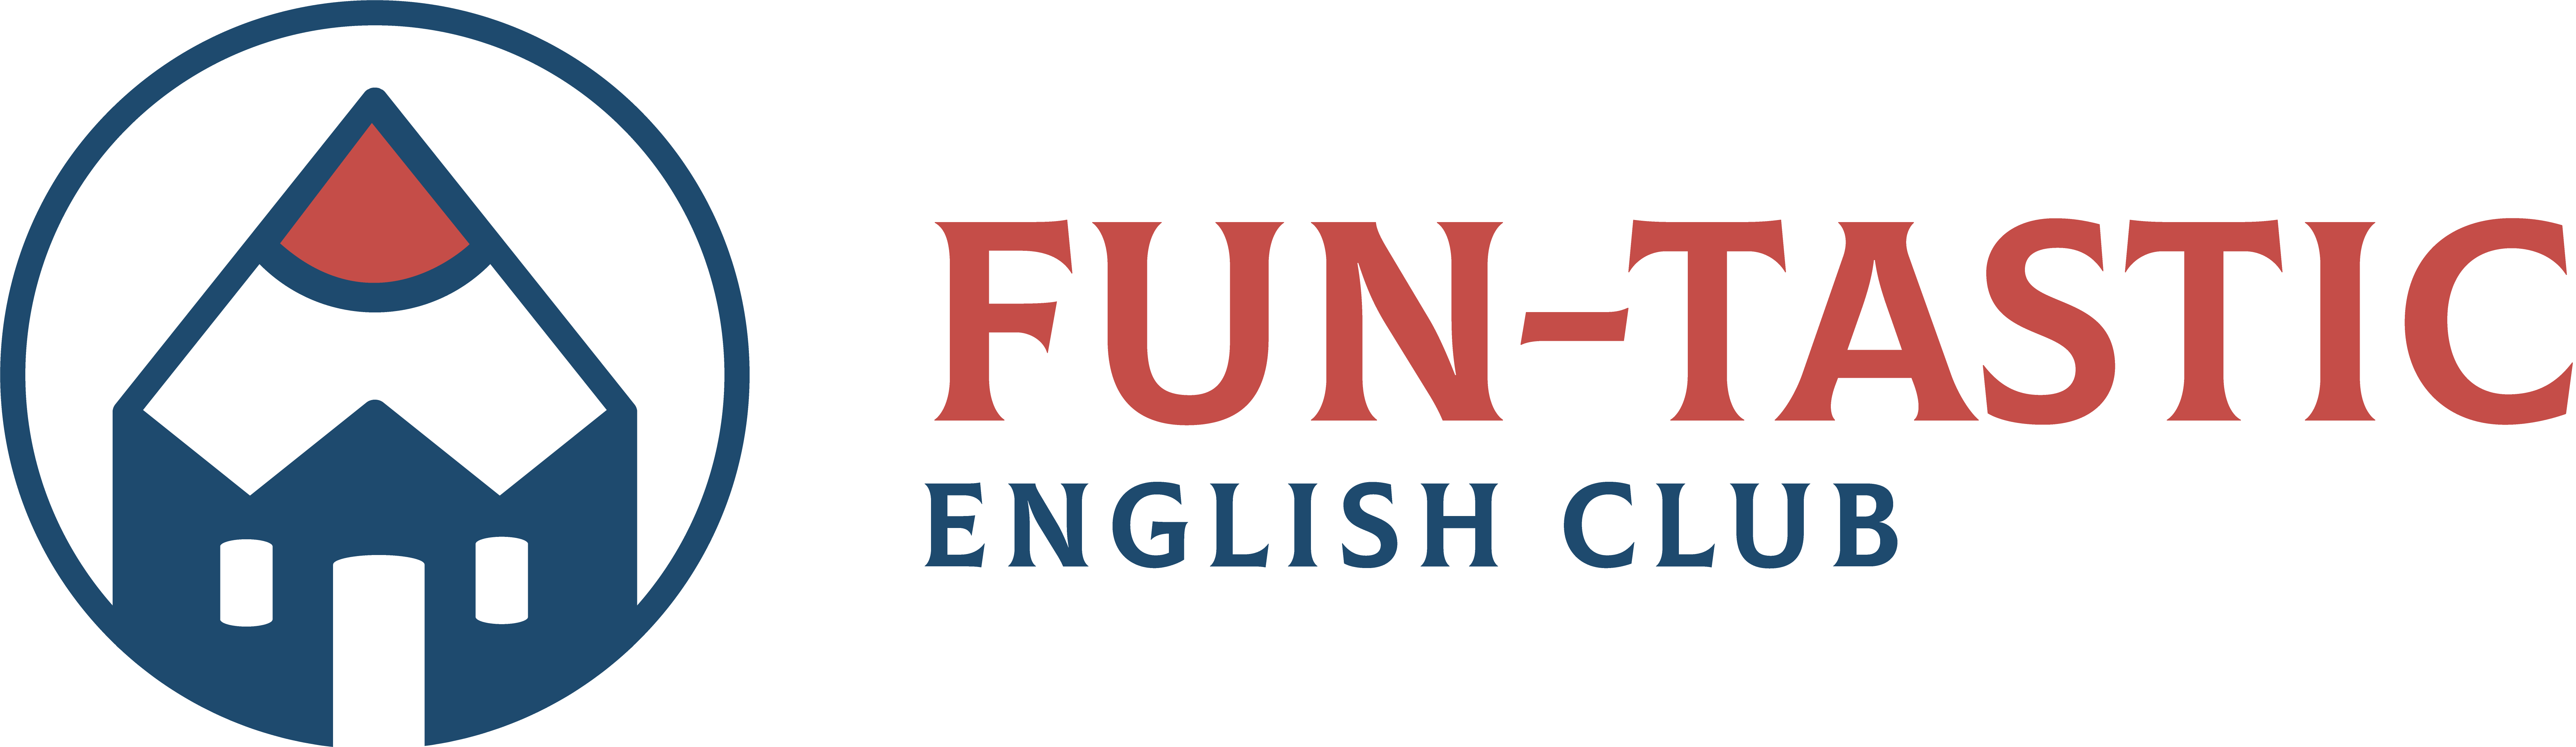 Fun-tastic English Club GmbH